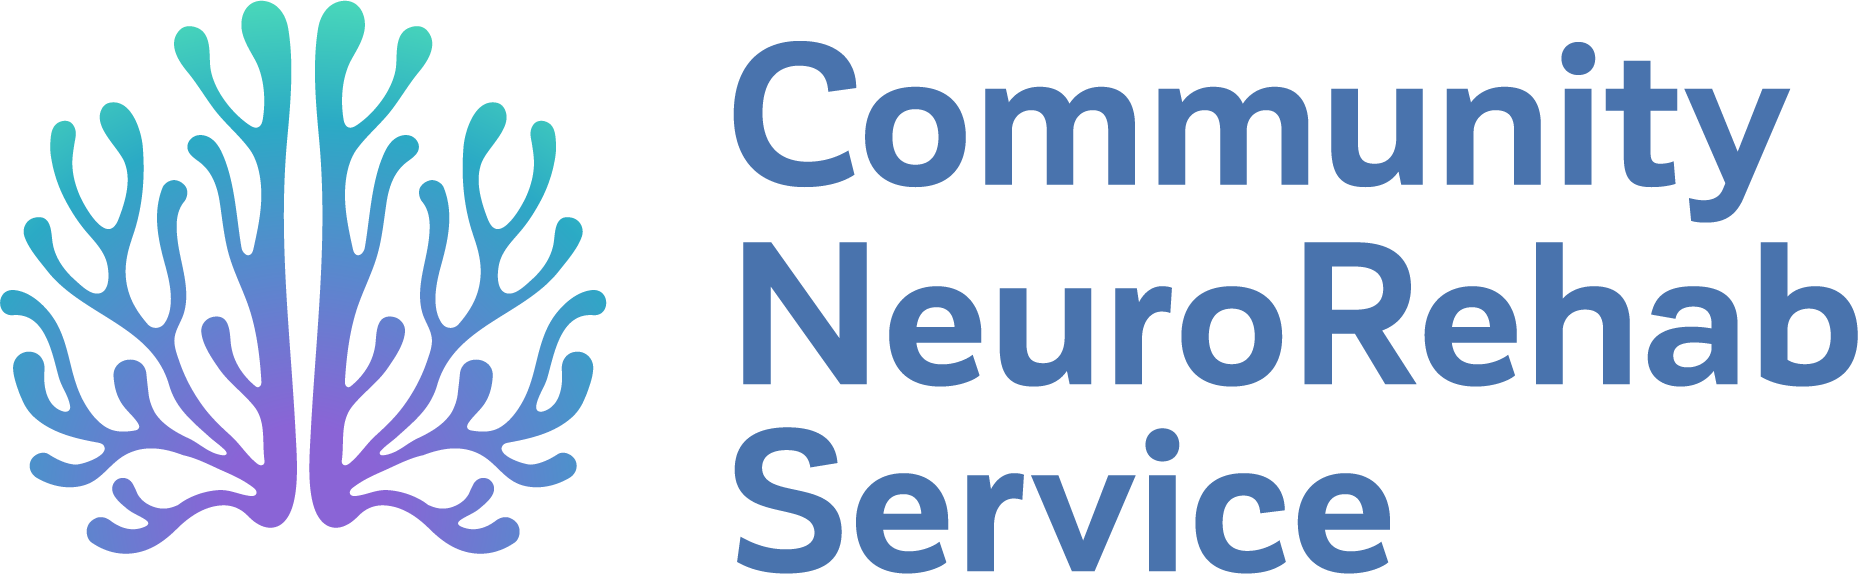 Community Neuro Rehab Service